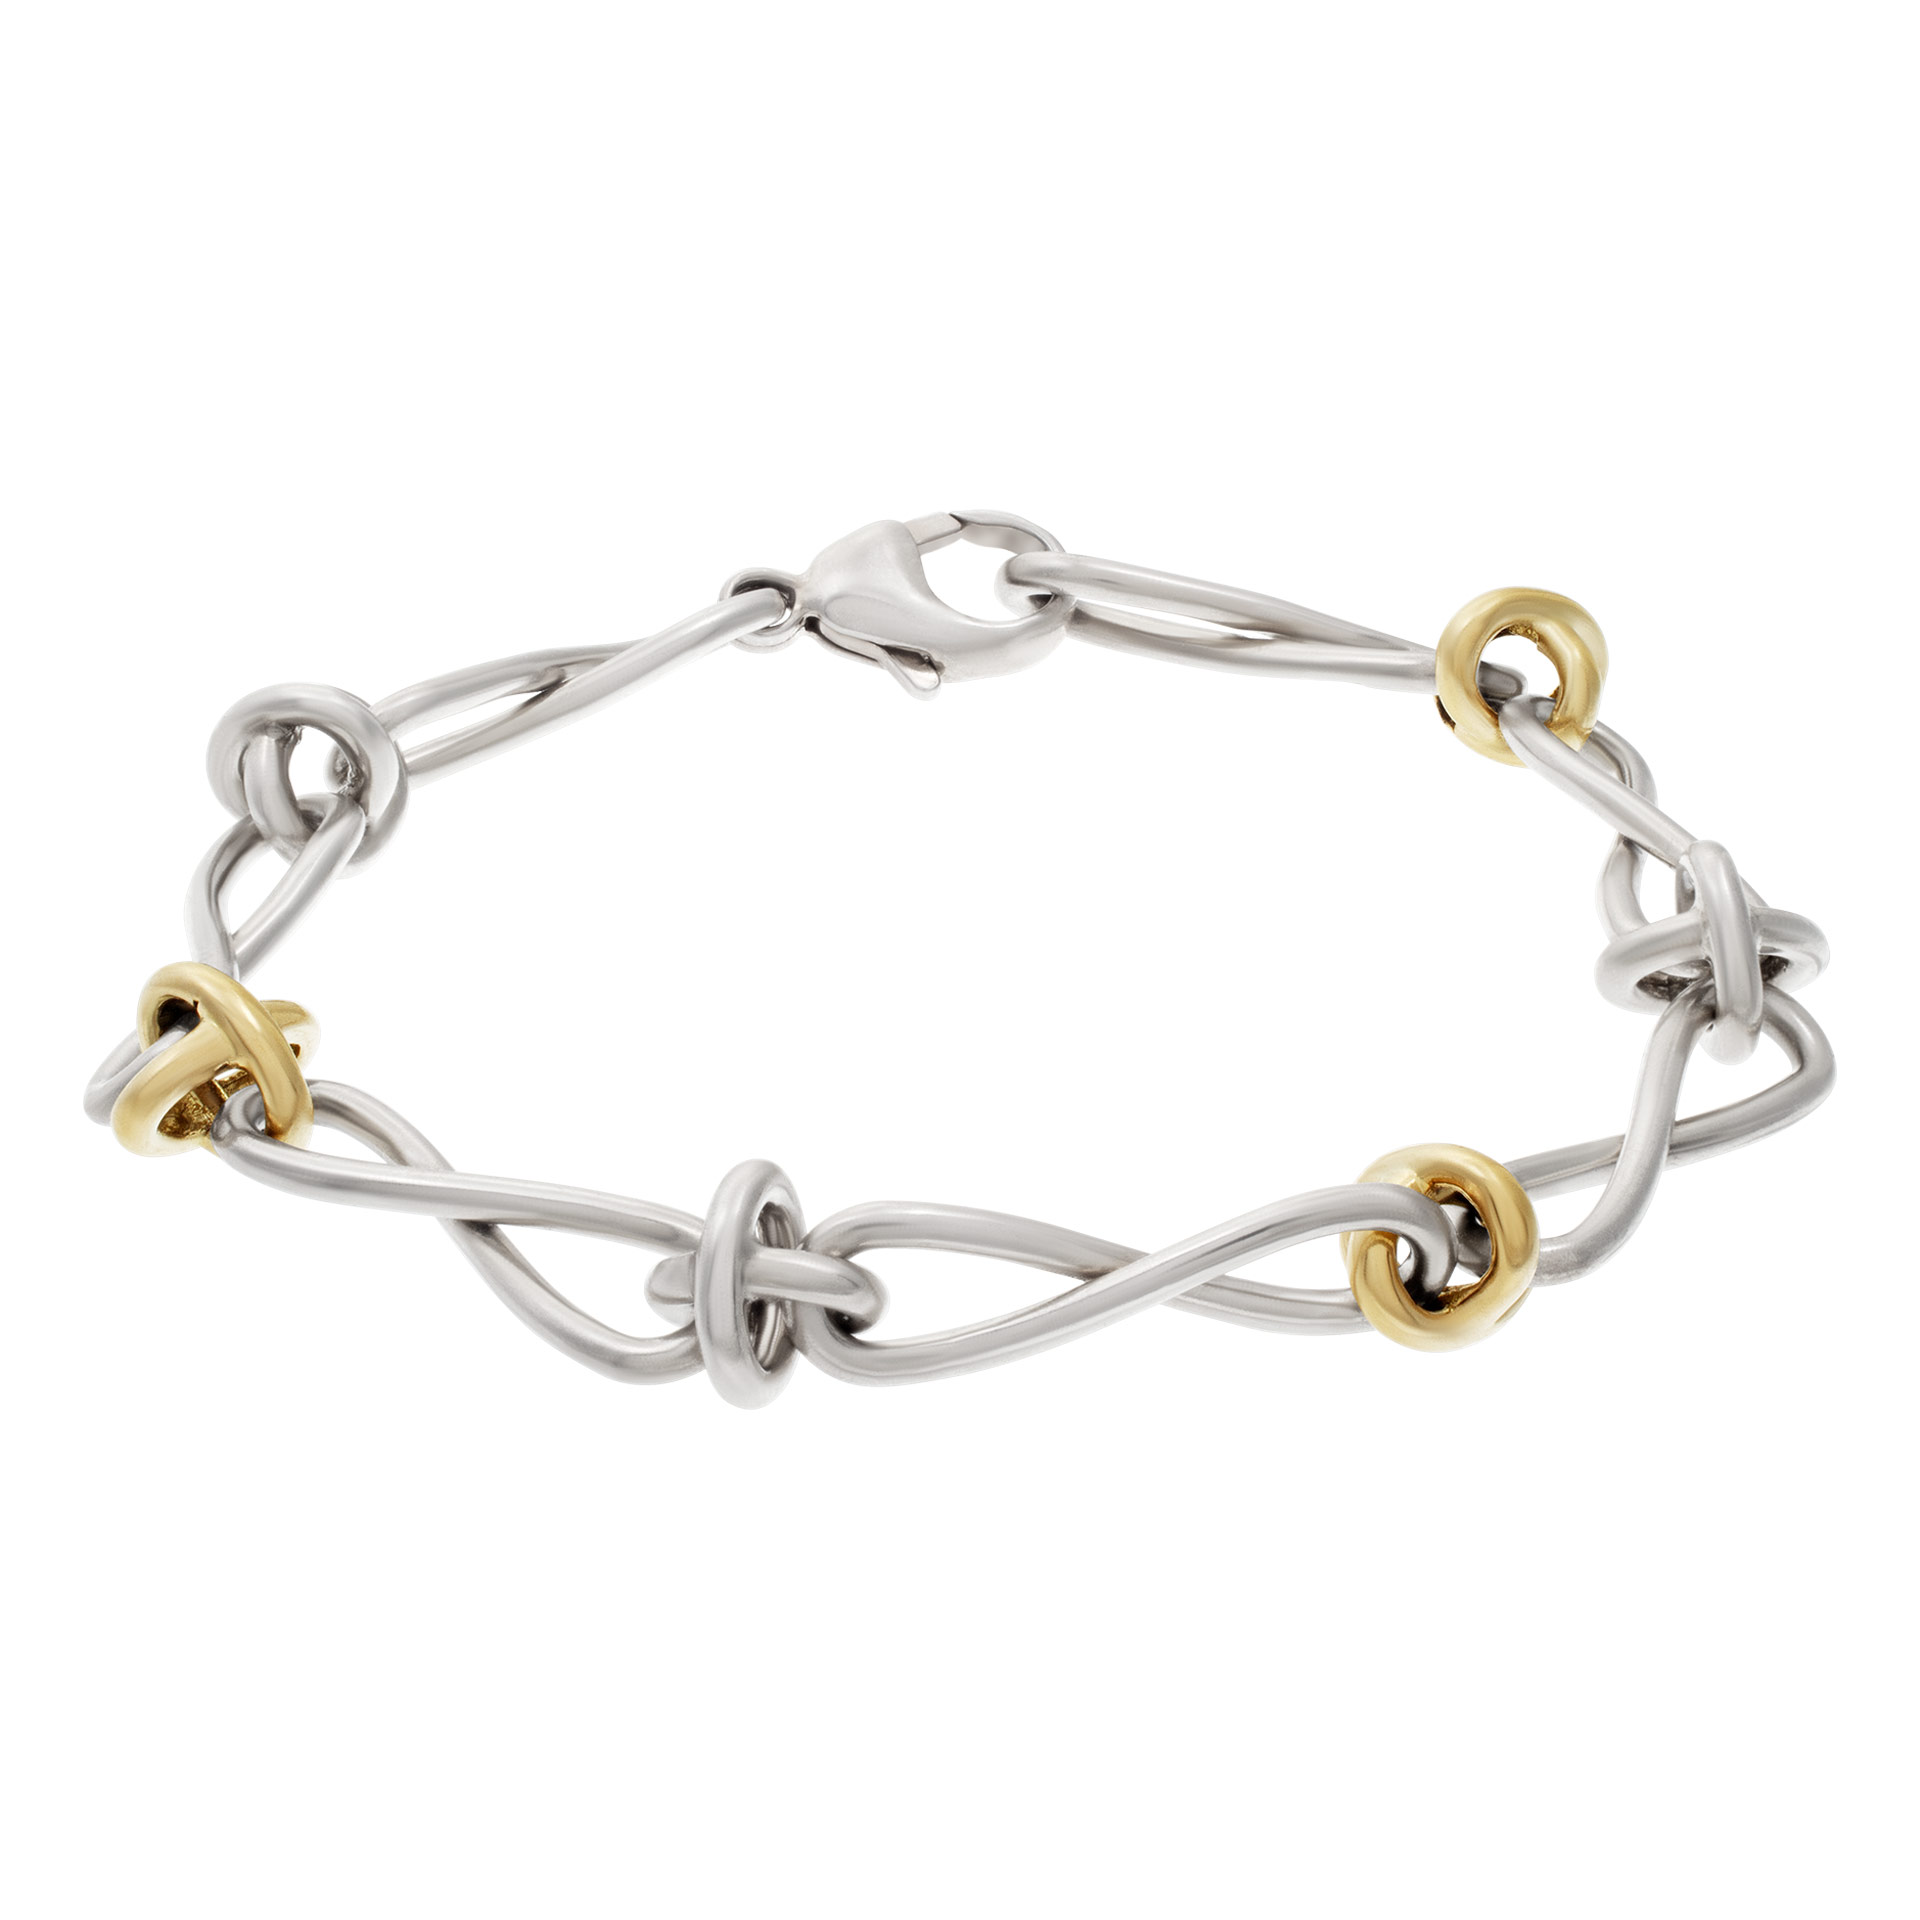 Tiffany & Co. Elsa Peretti bracelet in sterling silver and 18k